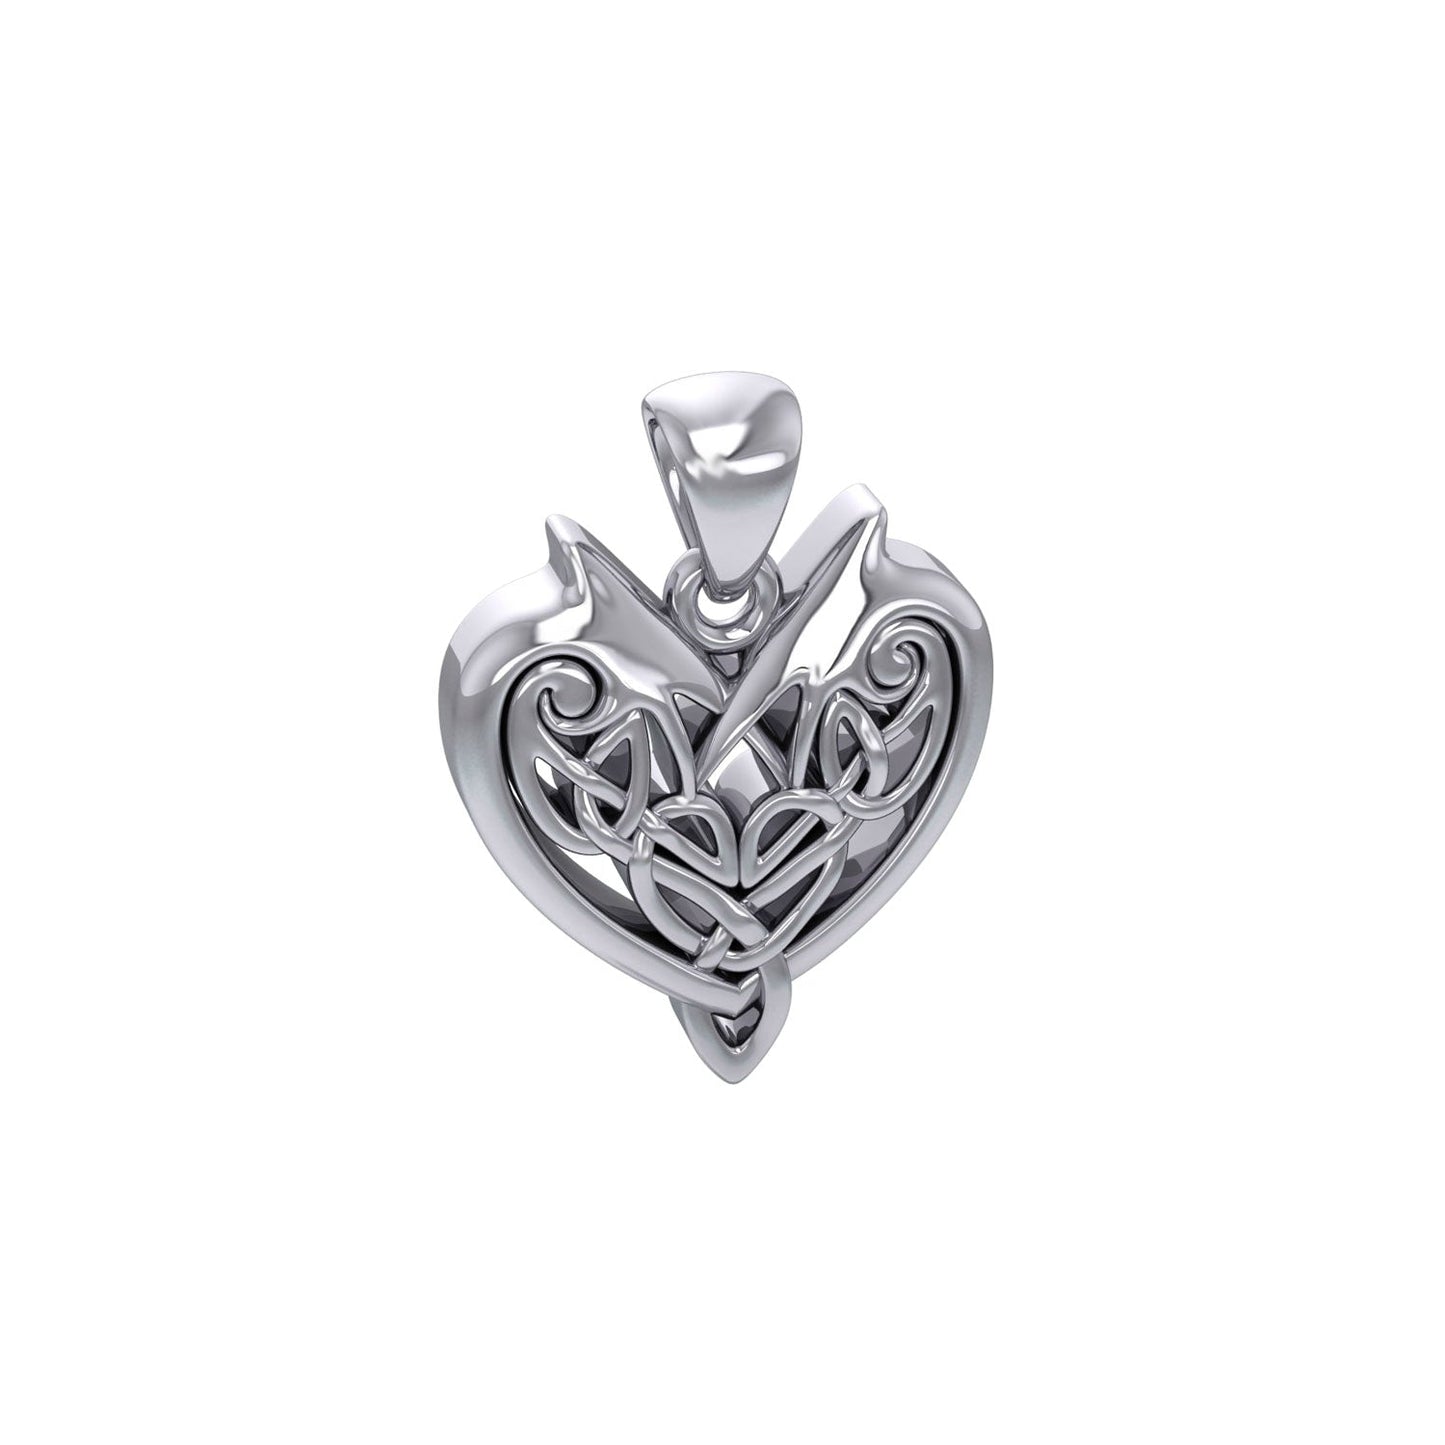 Joyous Celtic Heart Silver Pendant TP3515